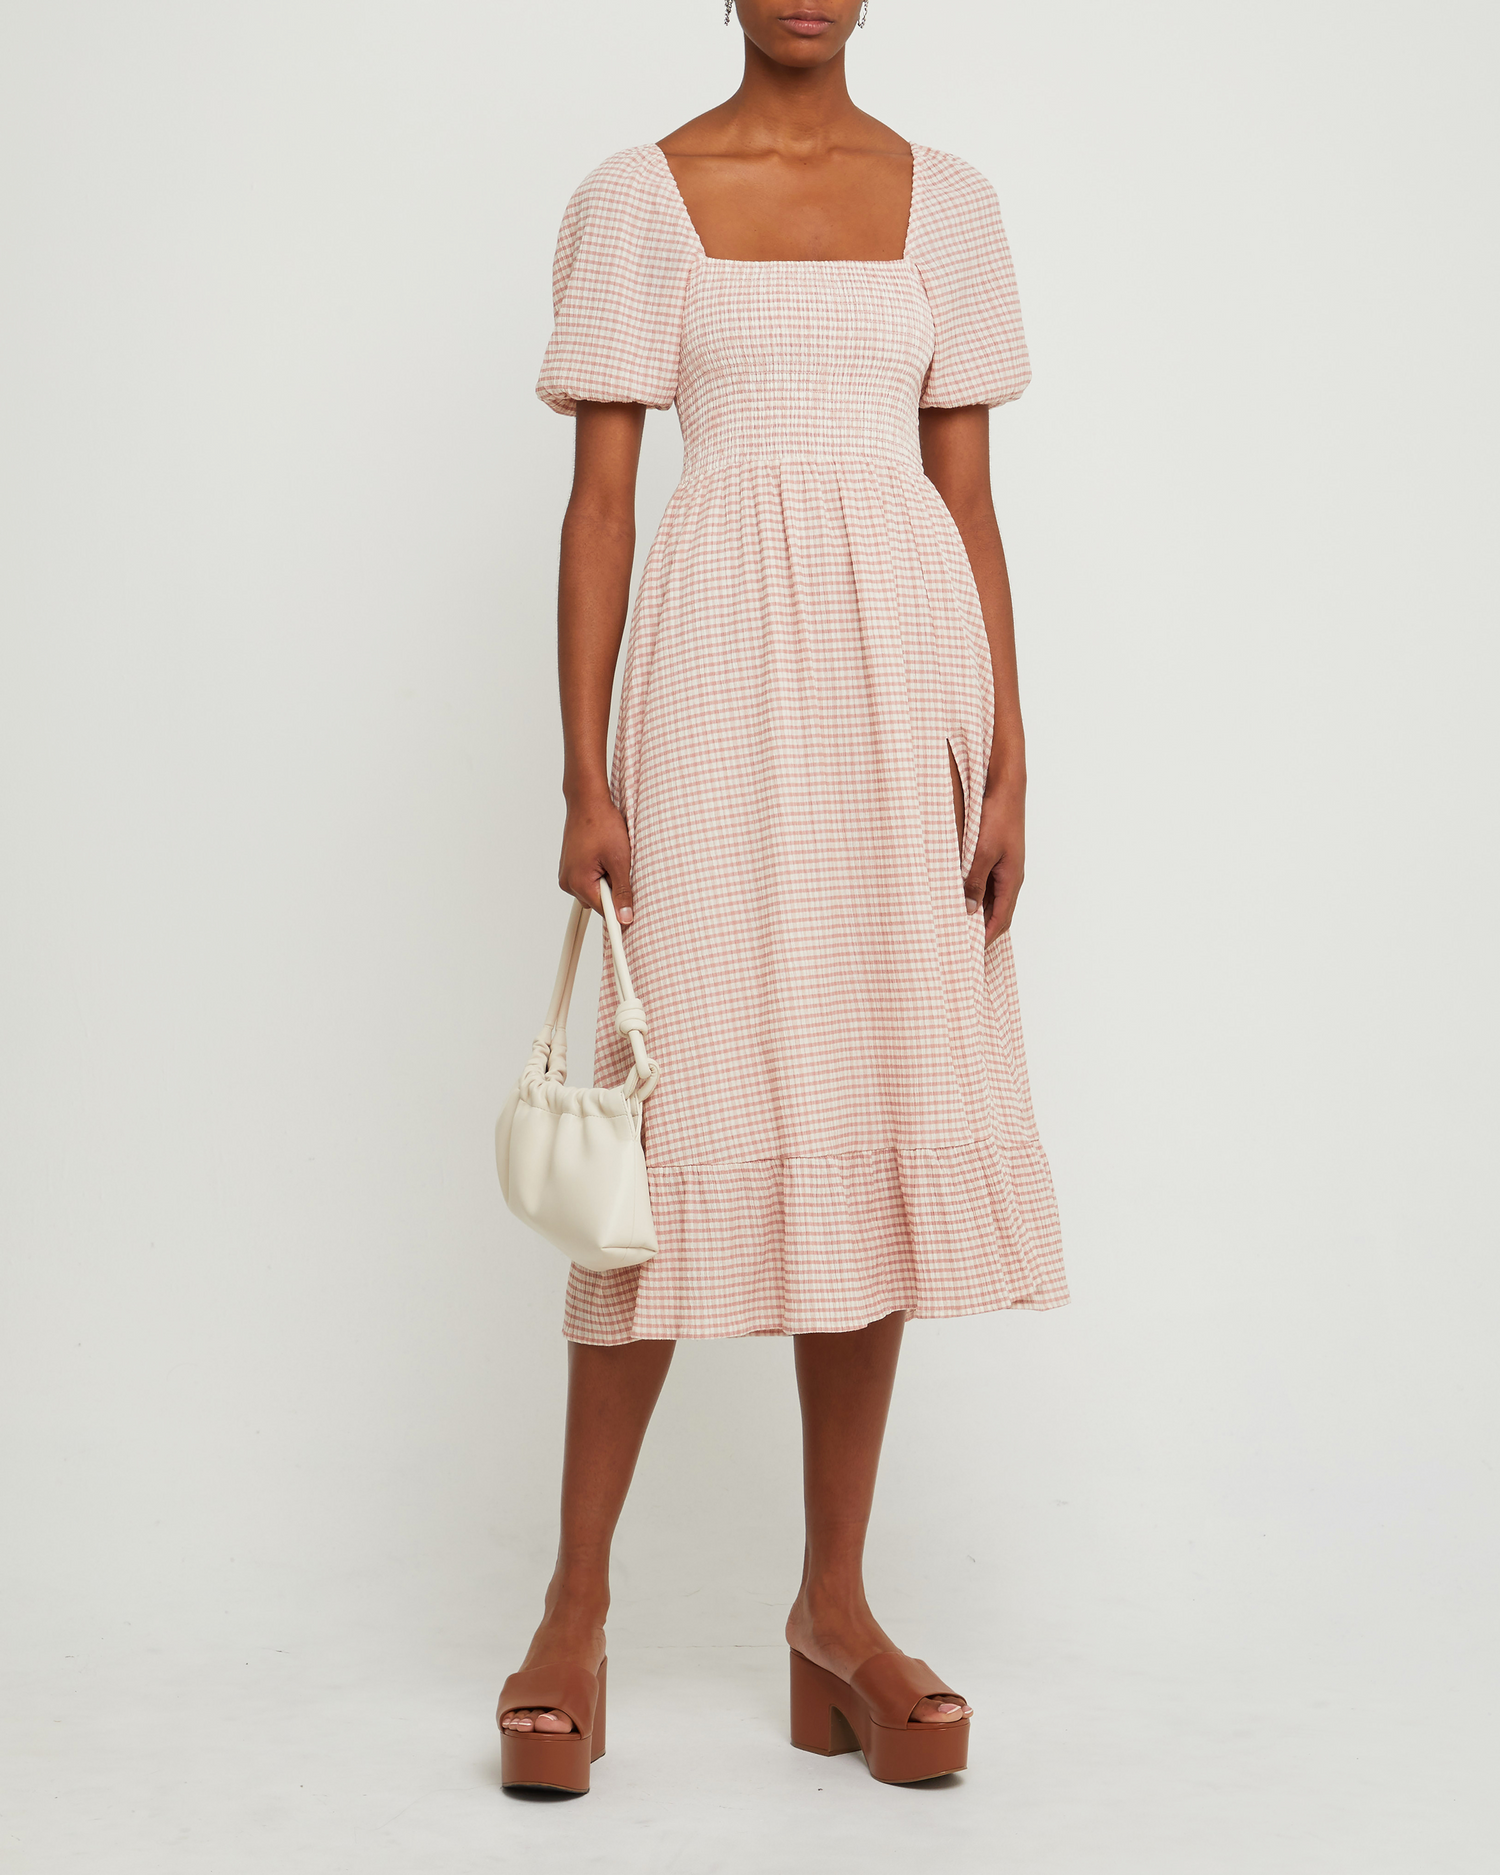 Fourth image of Daisy Midi Dress, a pink maxi dress, short sleeves, side slit, square neckline, smocked